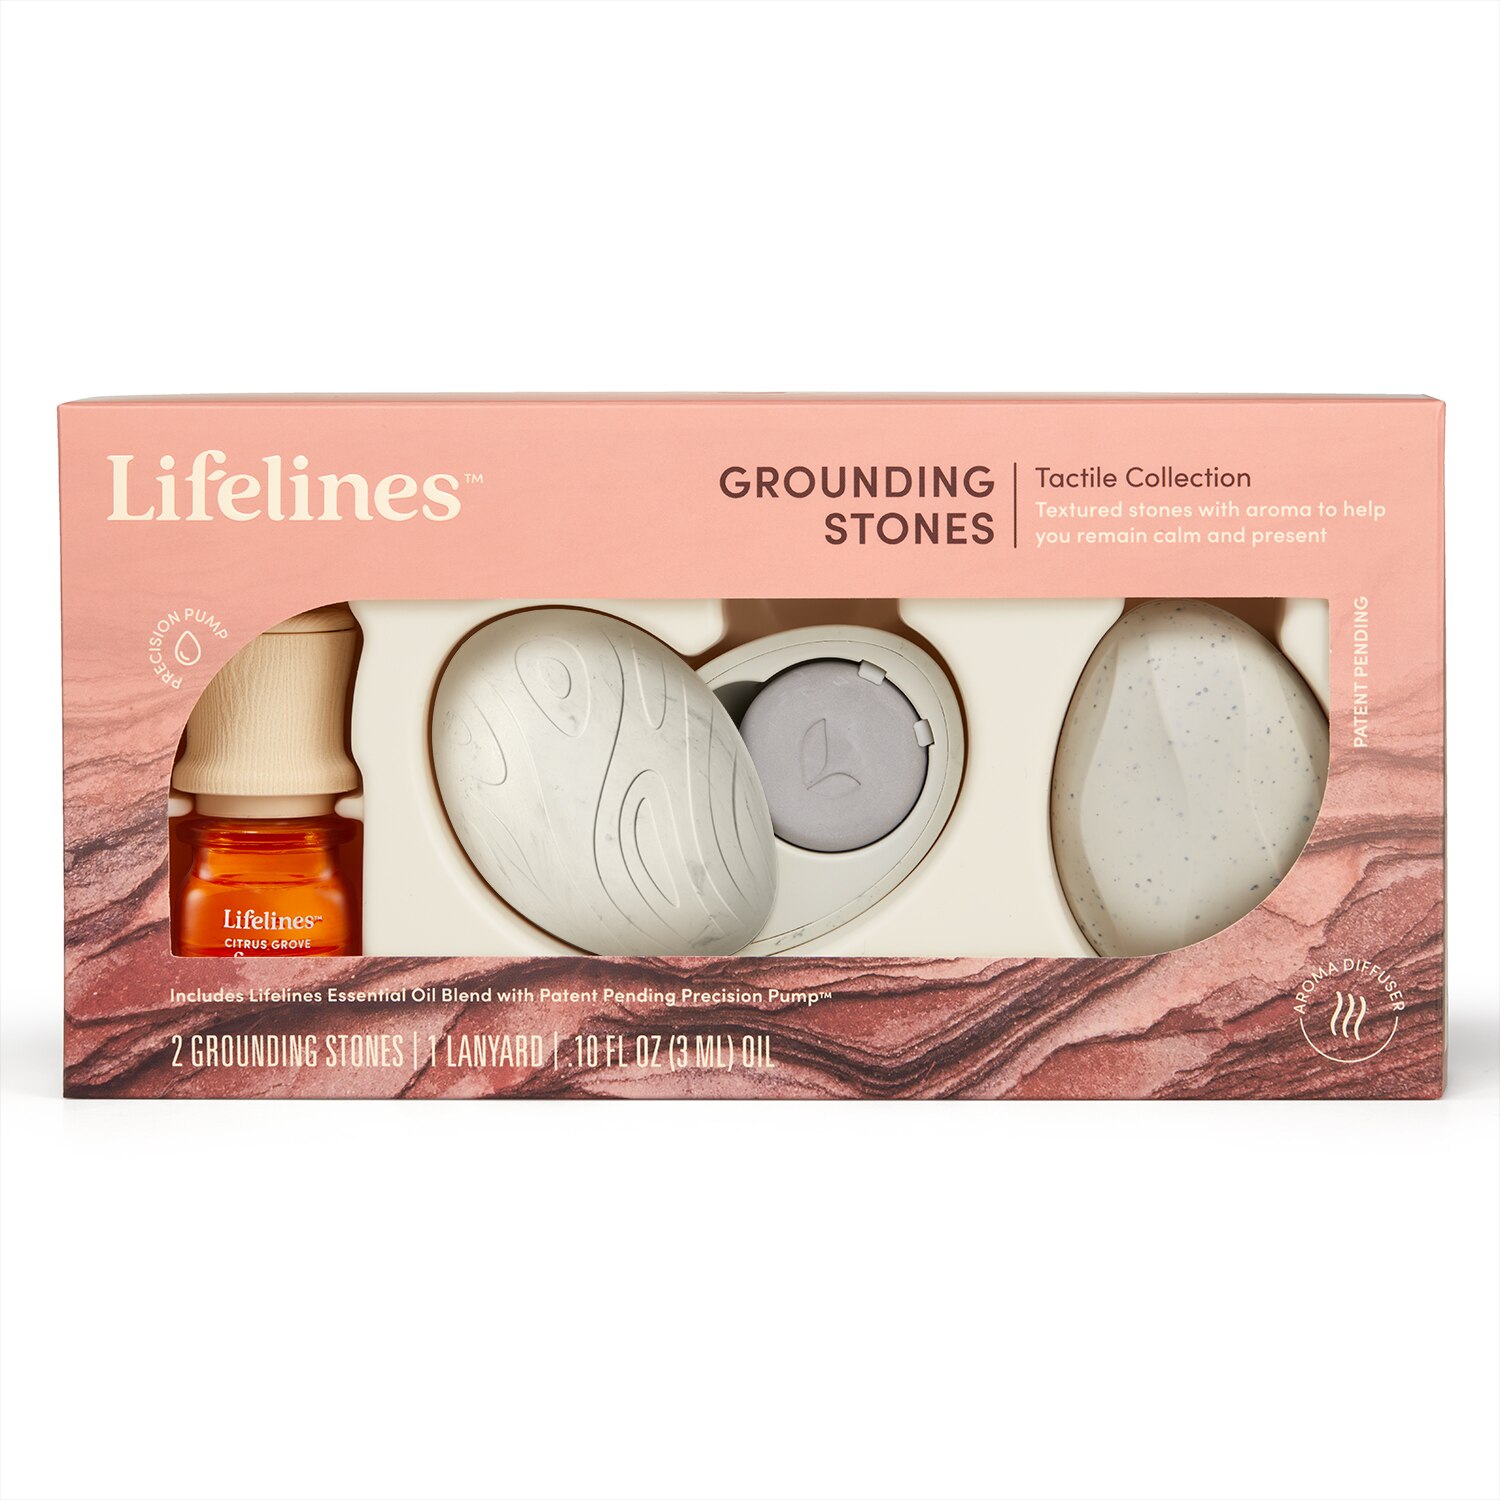 Lifelines Grounding Stones - Tactile Collection Plus Essential Oil Blend - 1 , CVS